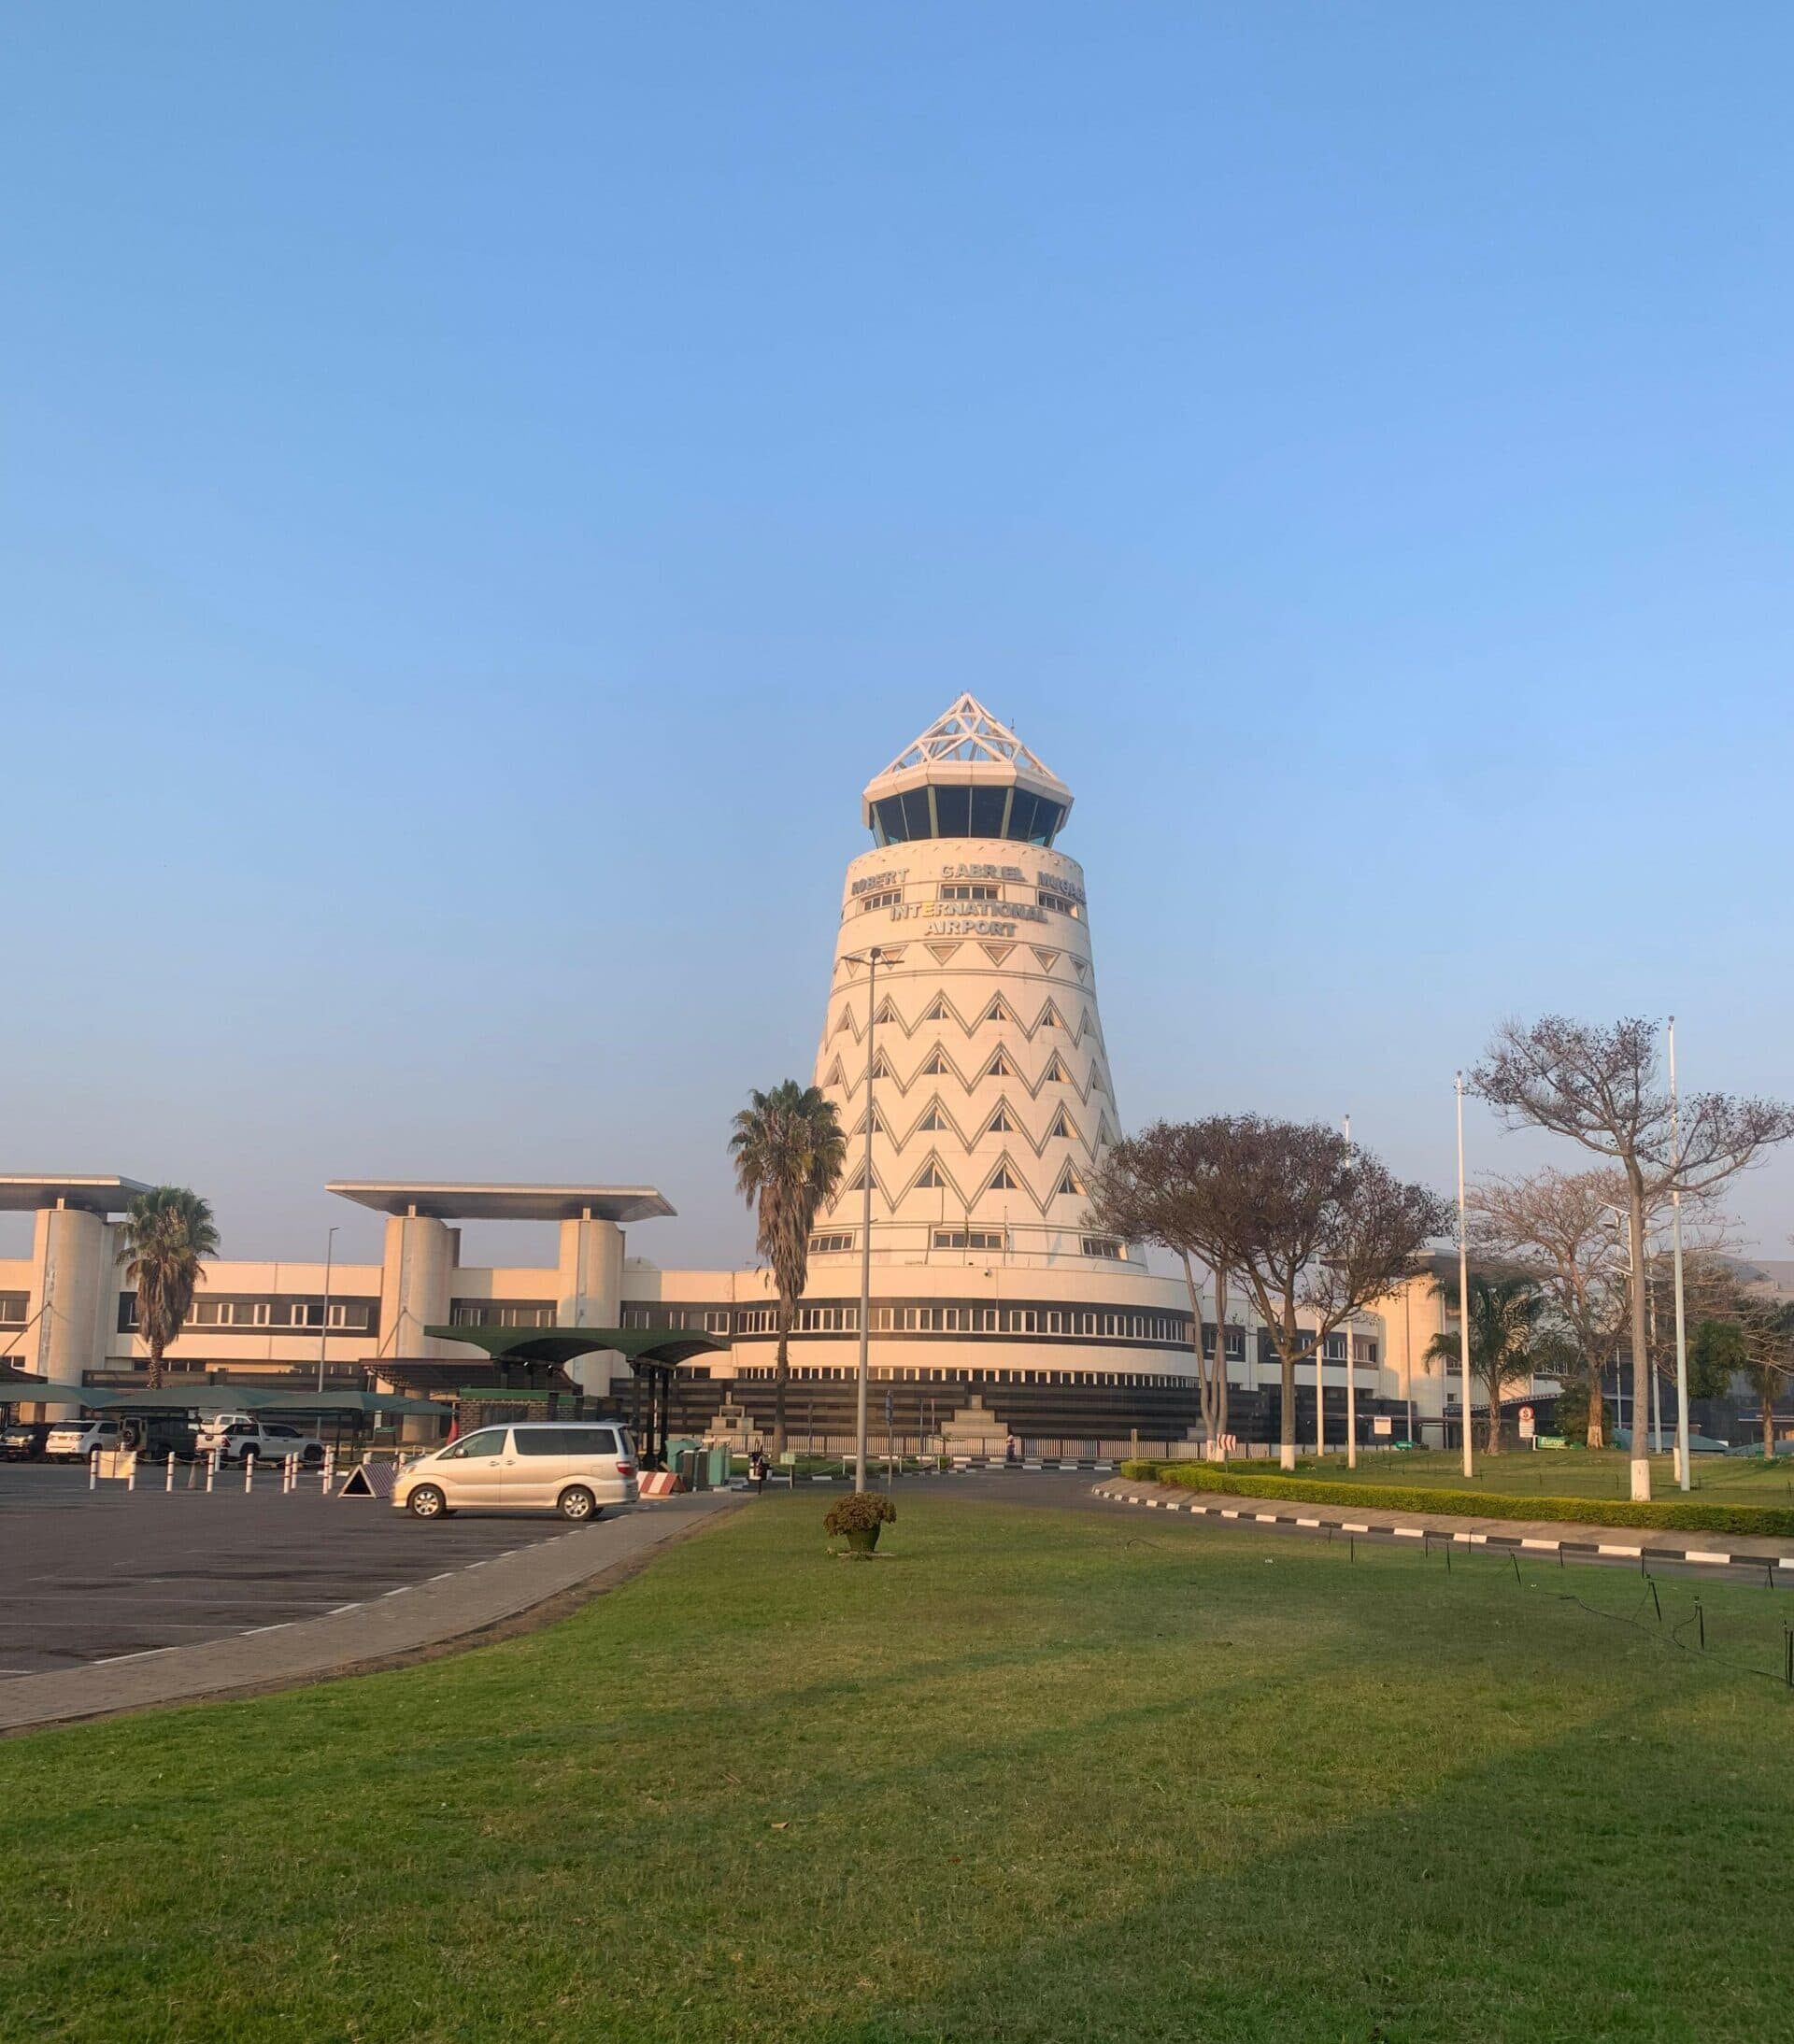 fastjet’s New Sales Shop at RG Mugabe International Airport